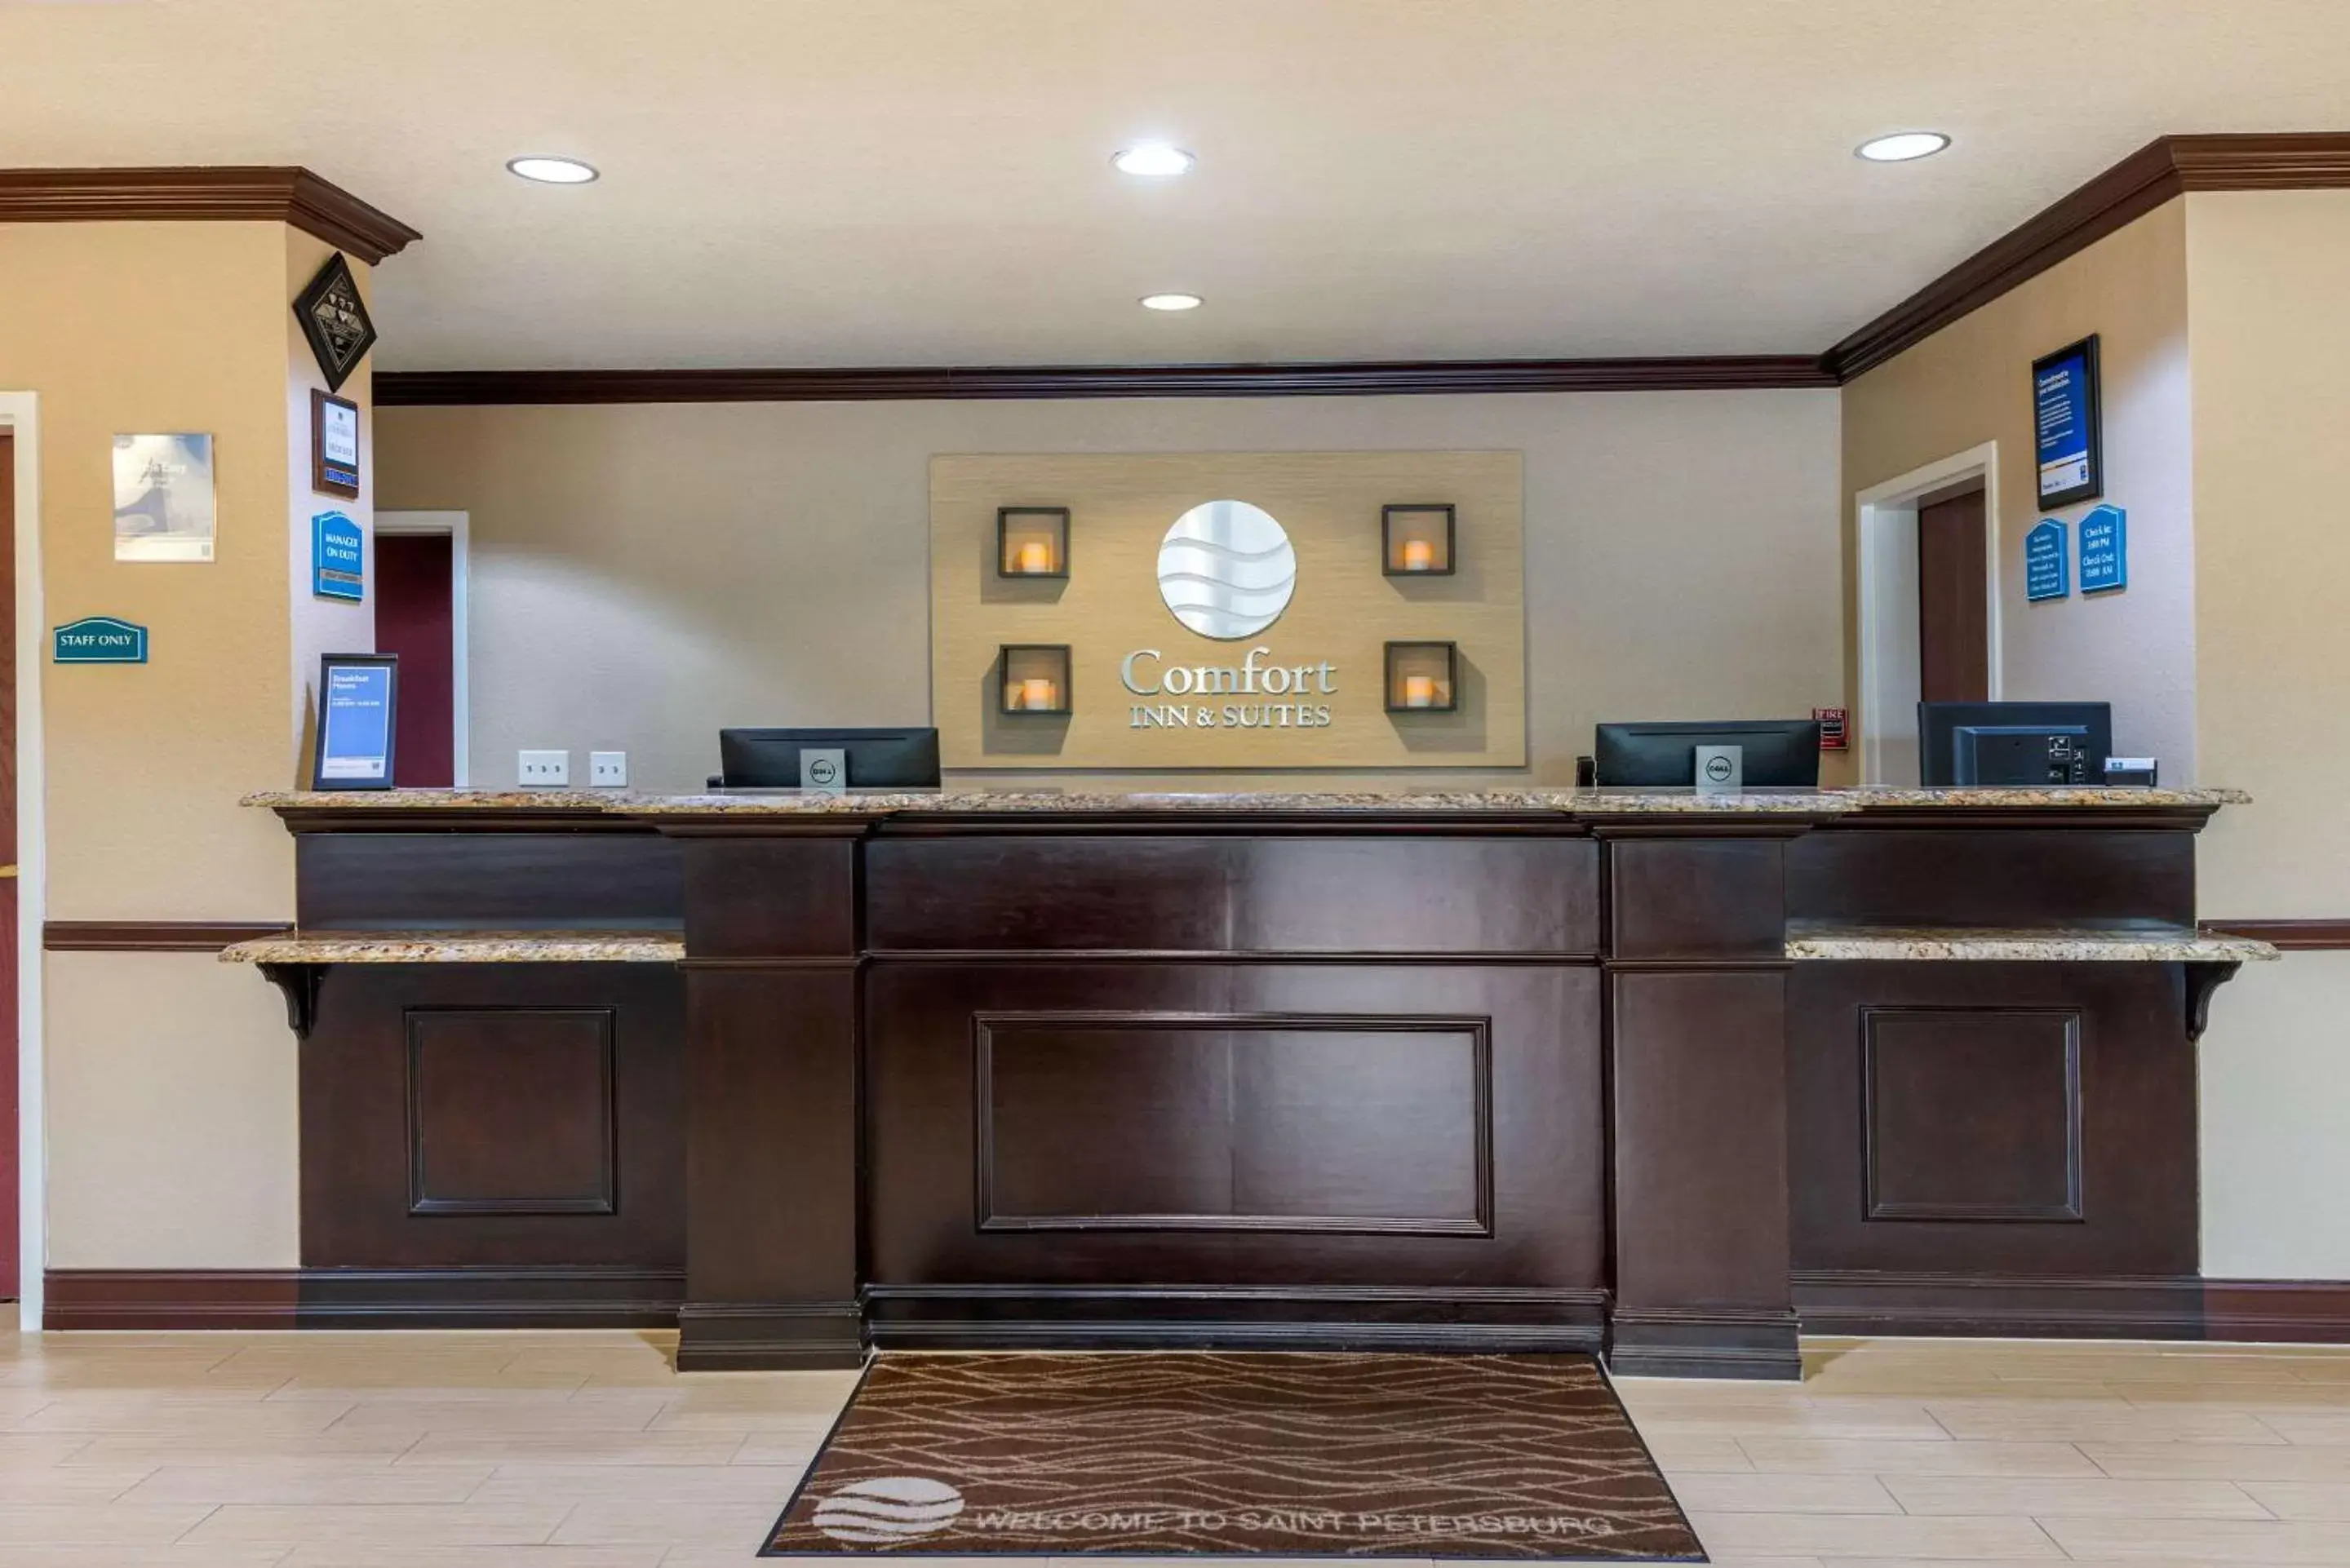 Lobby or reception, Lobby/Reception in Comfort Inn & Suites Northeast - Gateway